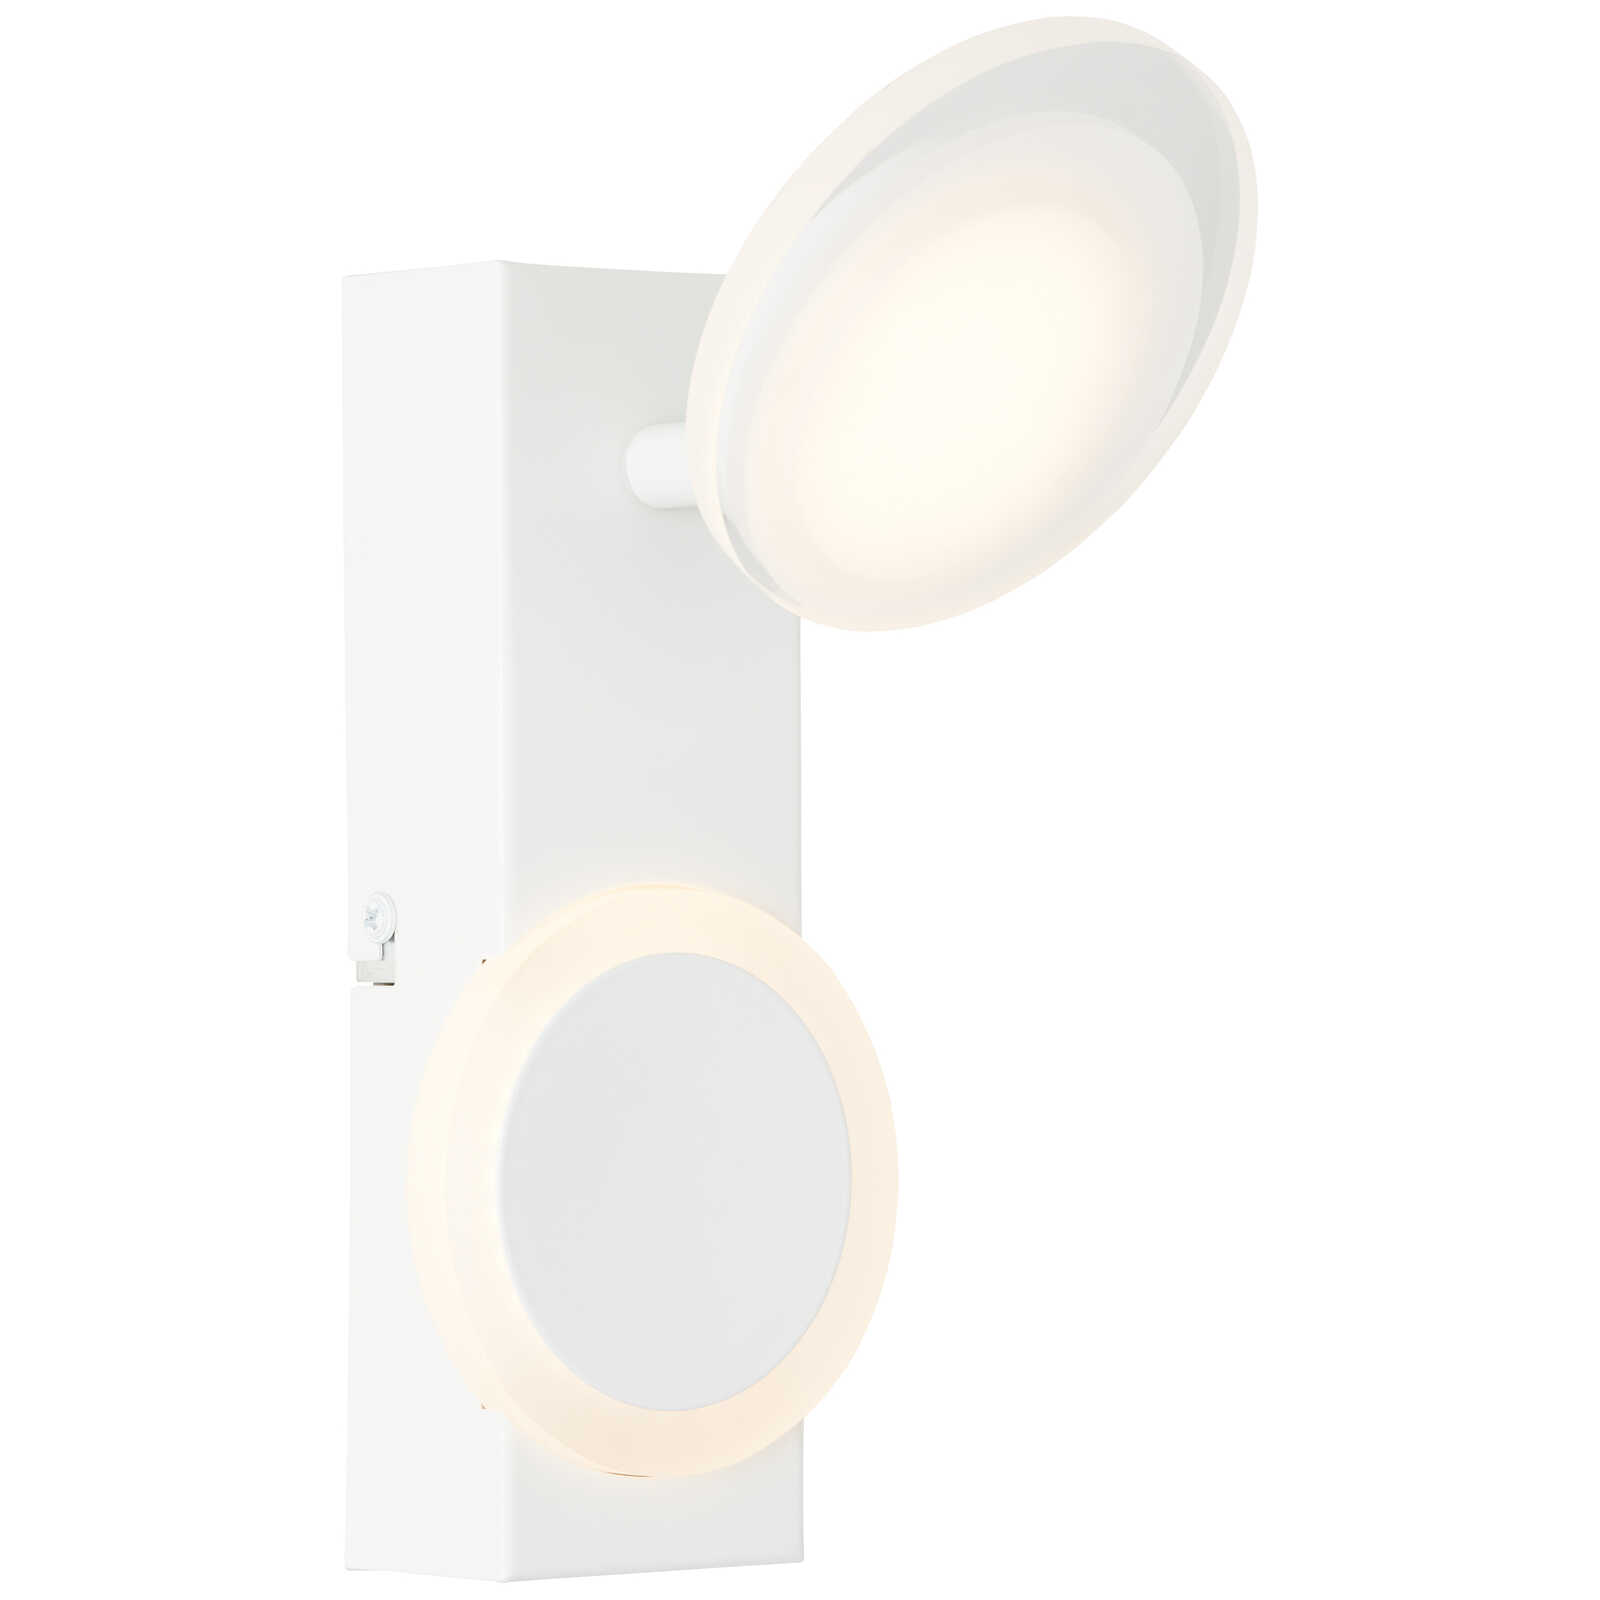             Plastic wall spotlight - Lilly 1 - White
        